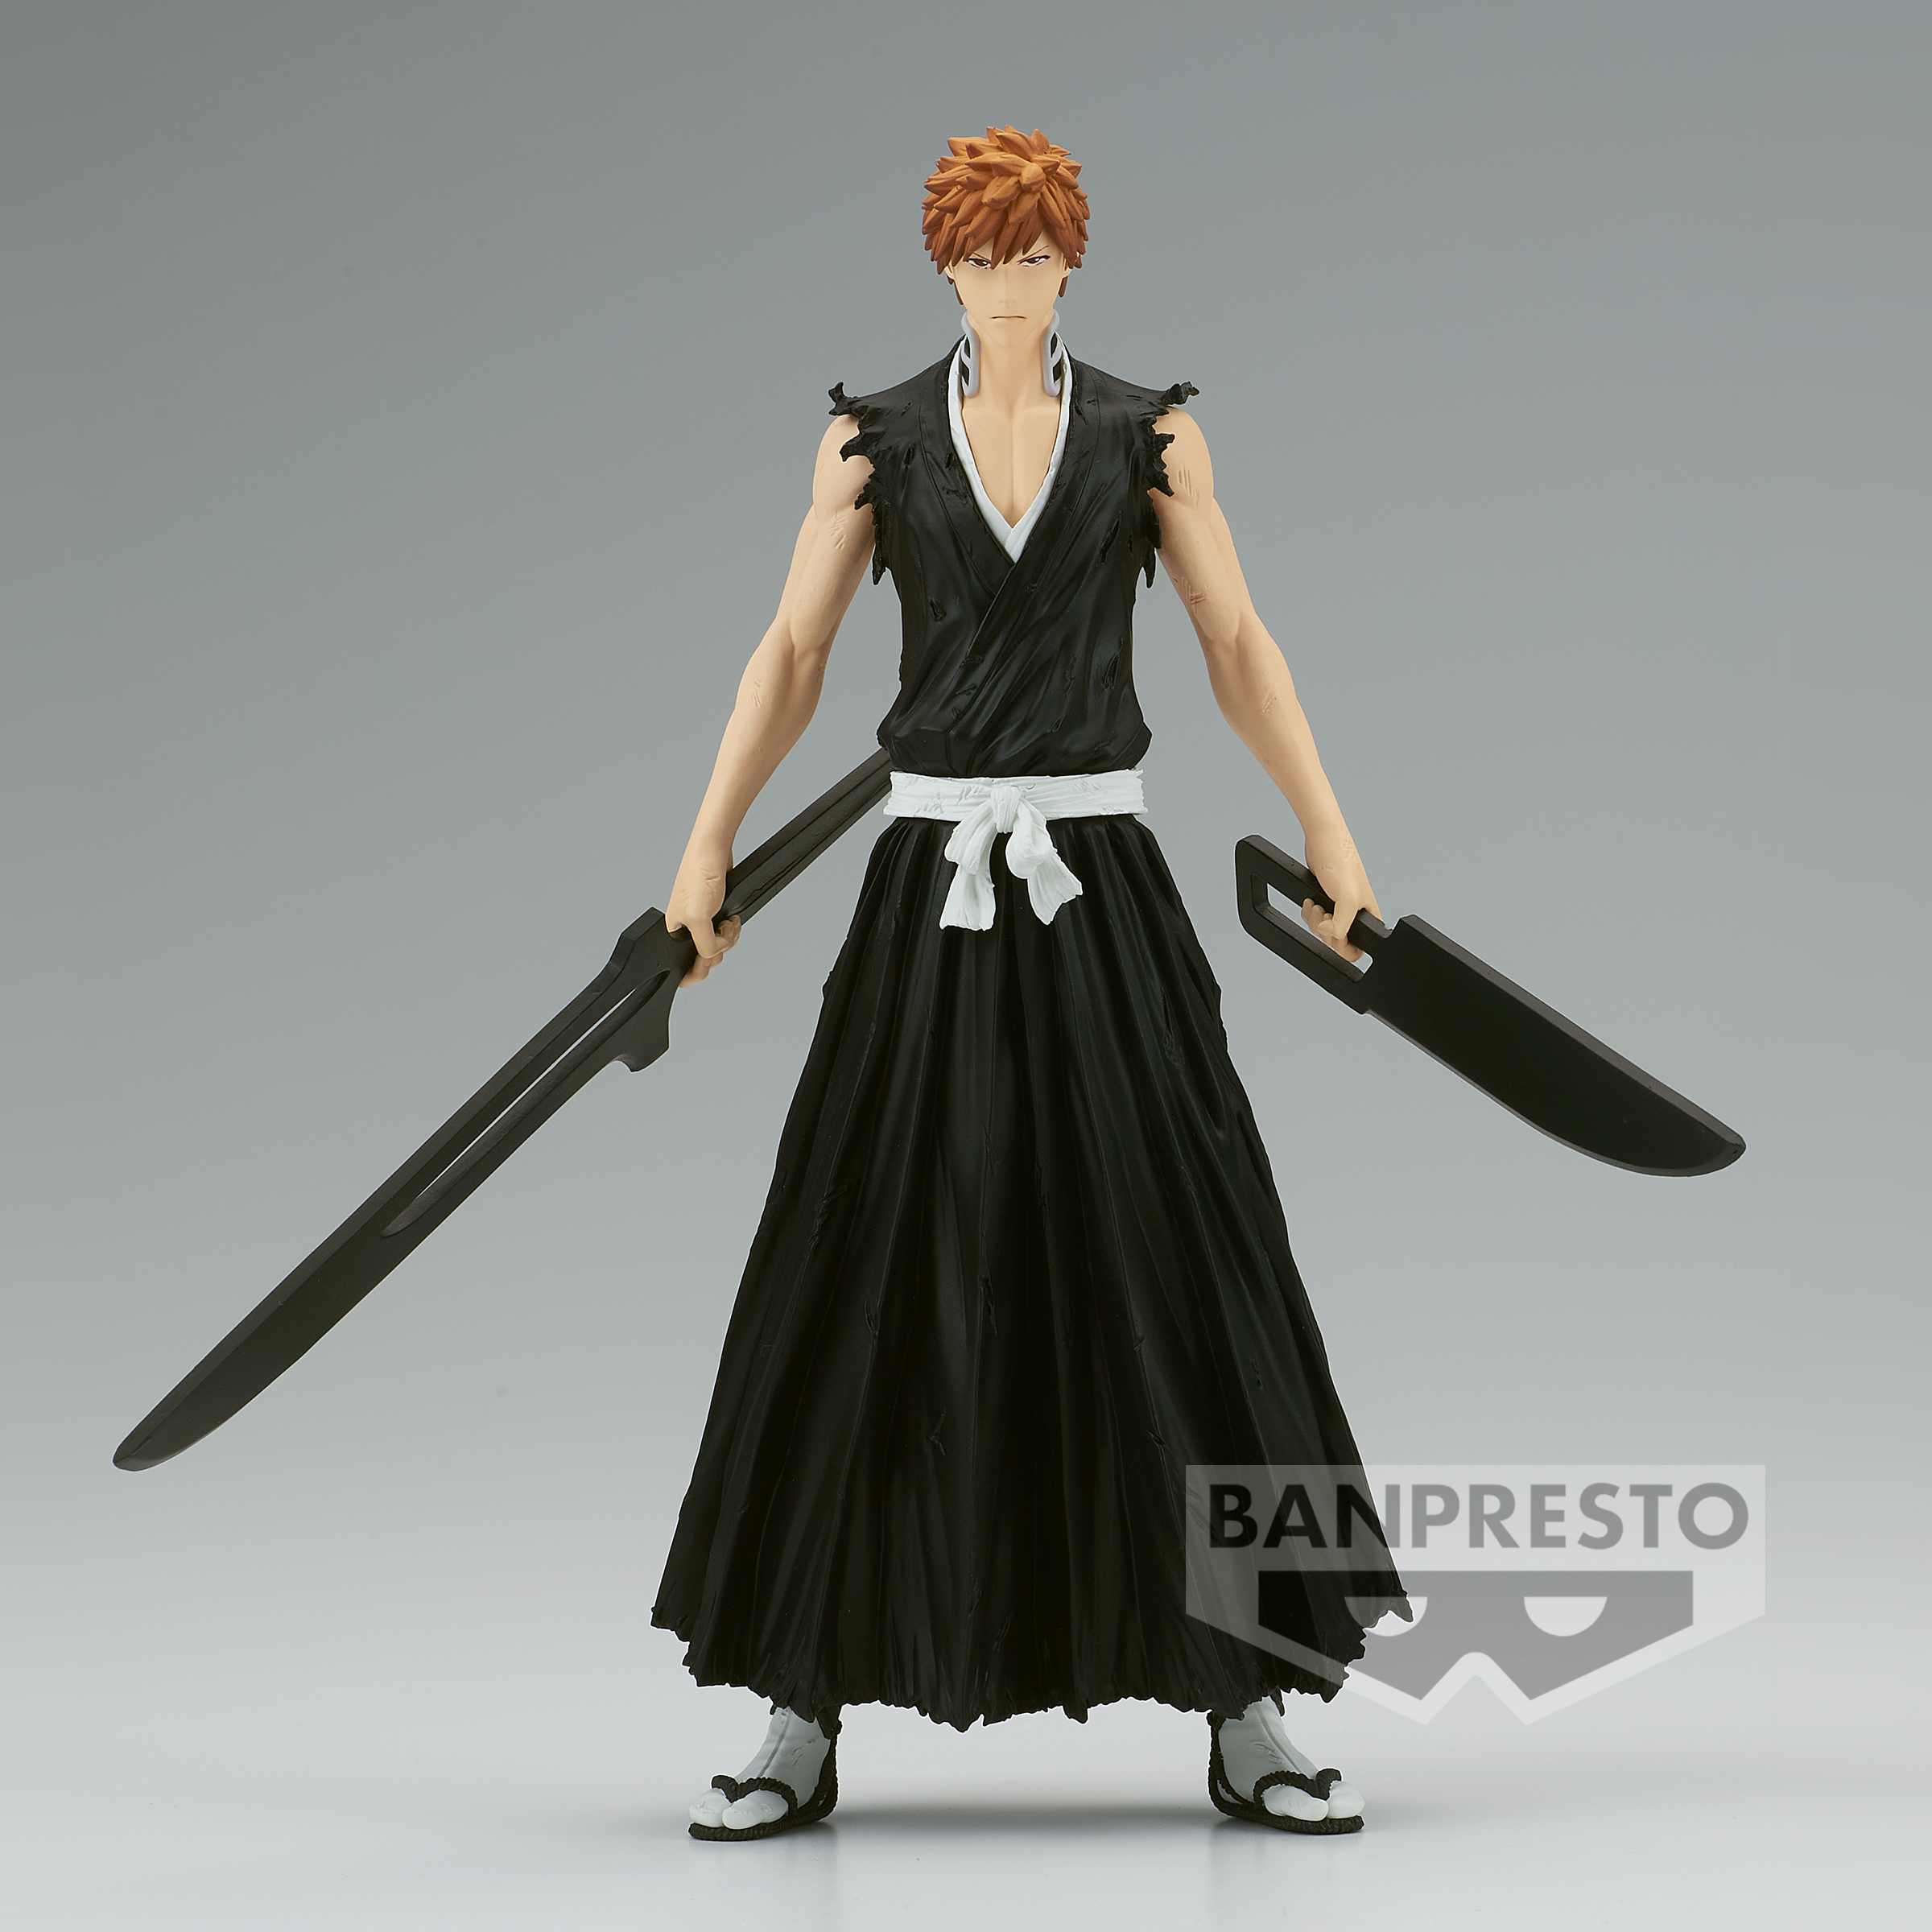 Original Banpresto Bleach Solid And Souls Fullbringer Kurosaki Ichigo 17cm  Pvc Anime Figure Model Toy Figurine Statue Collection - AliExpress